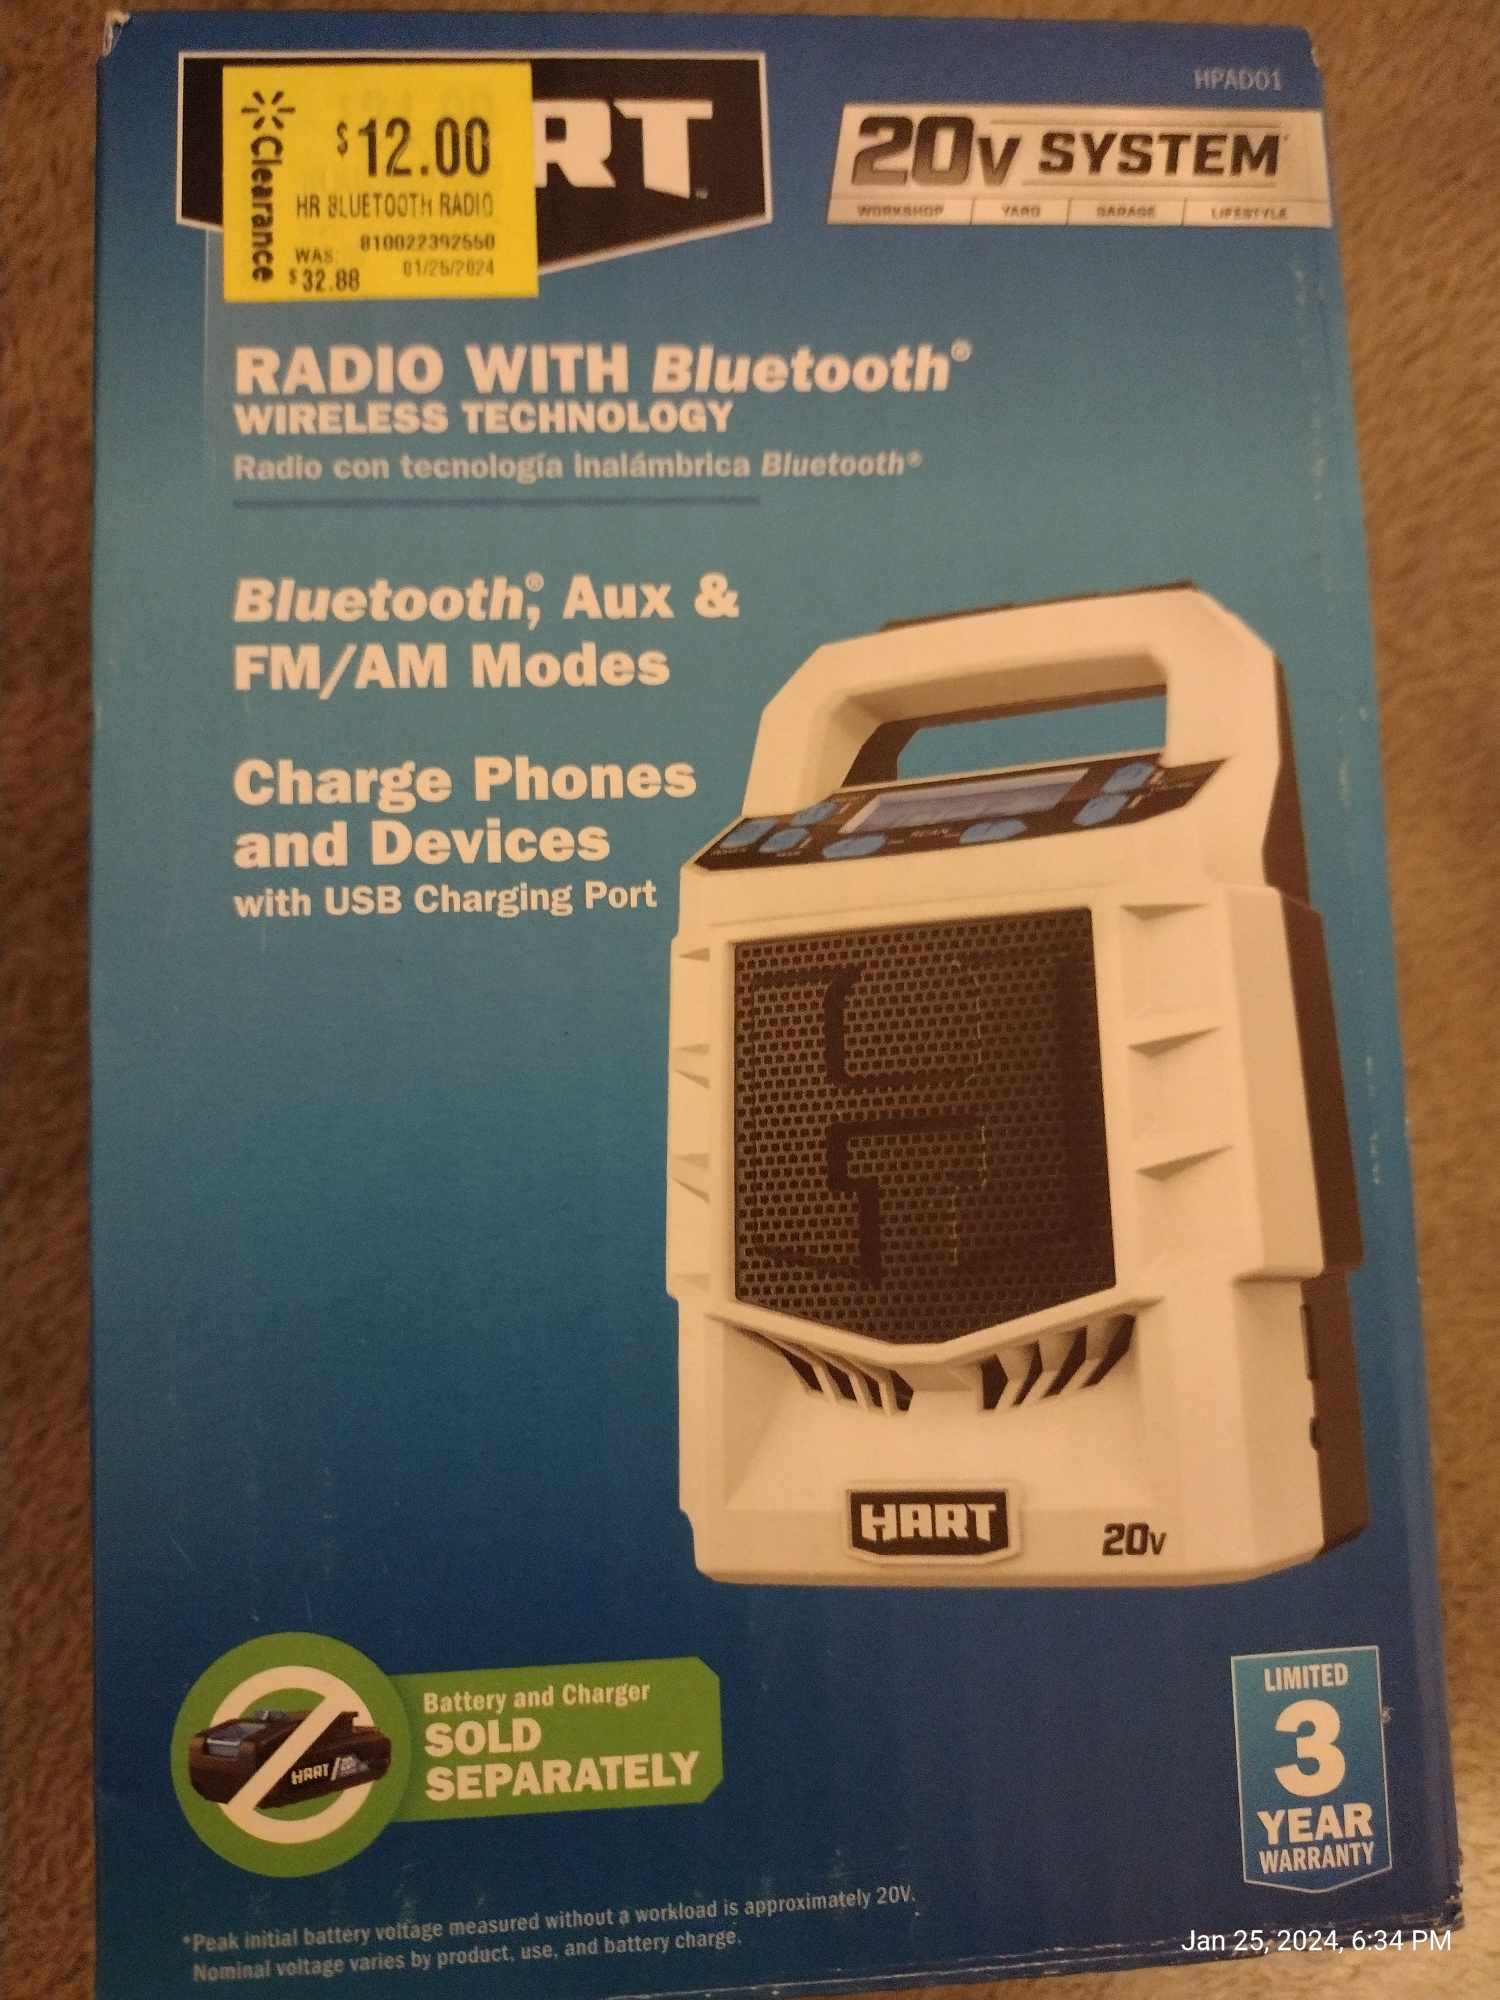 20V Bluetooth Radio and other Hart Clearance @ Walmart YMMV $12